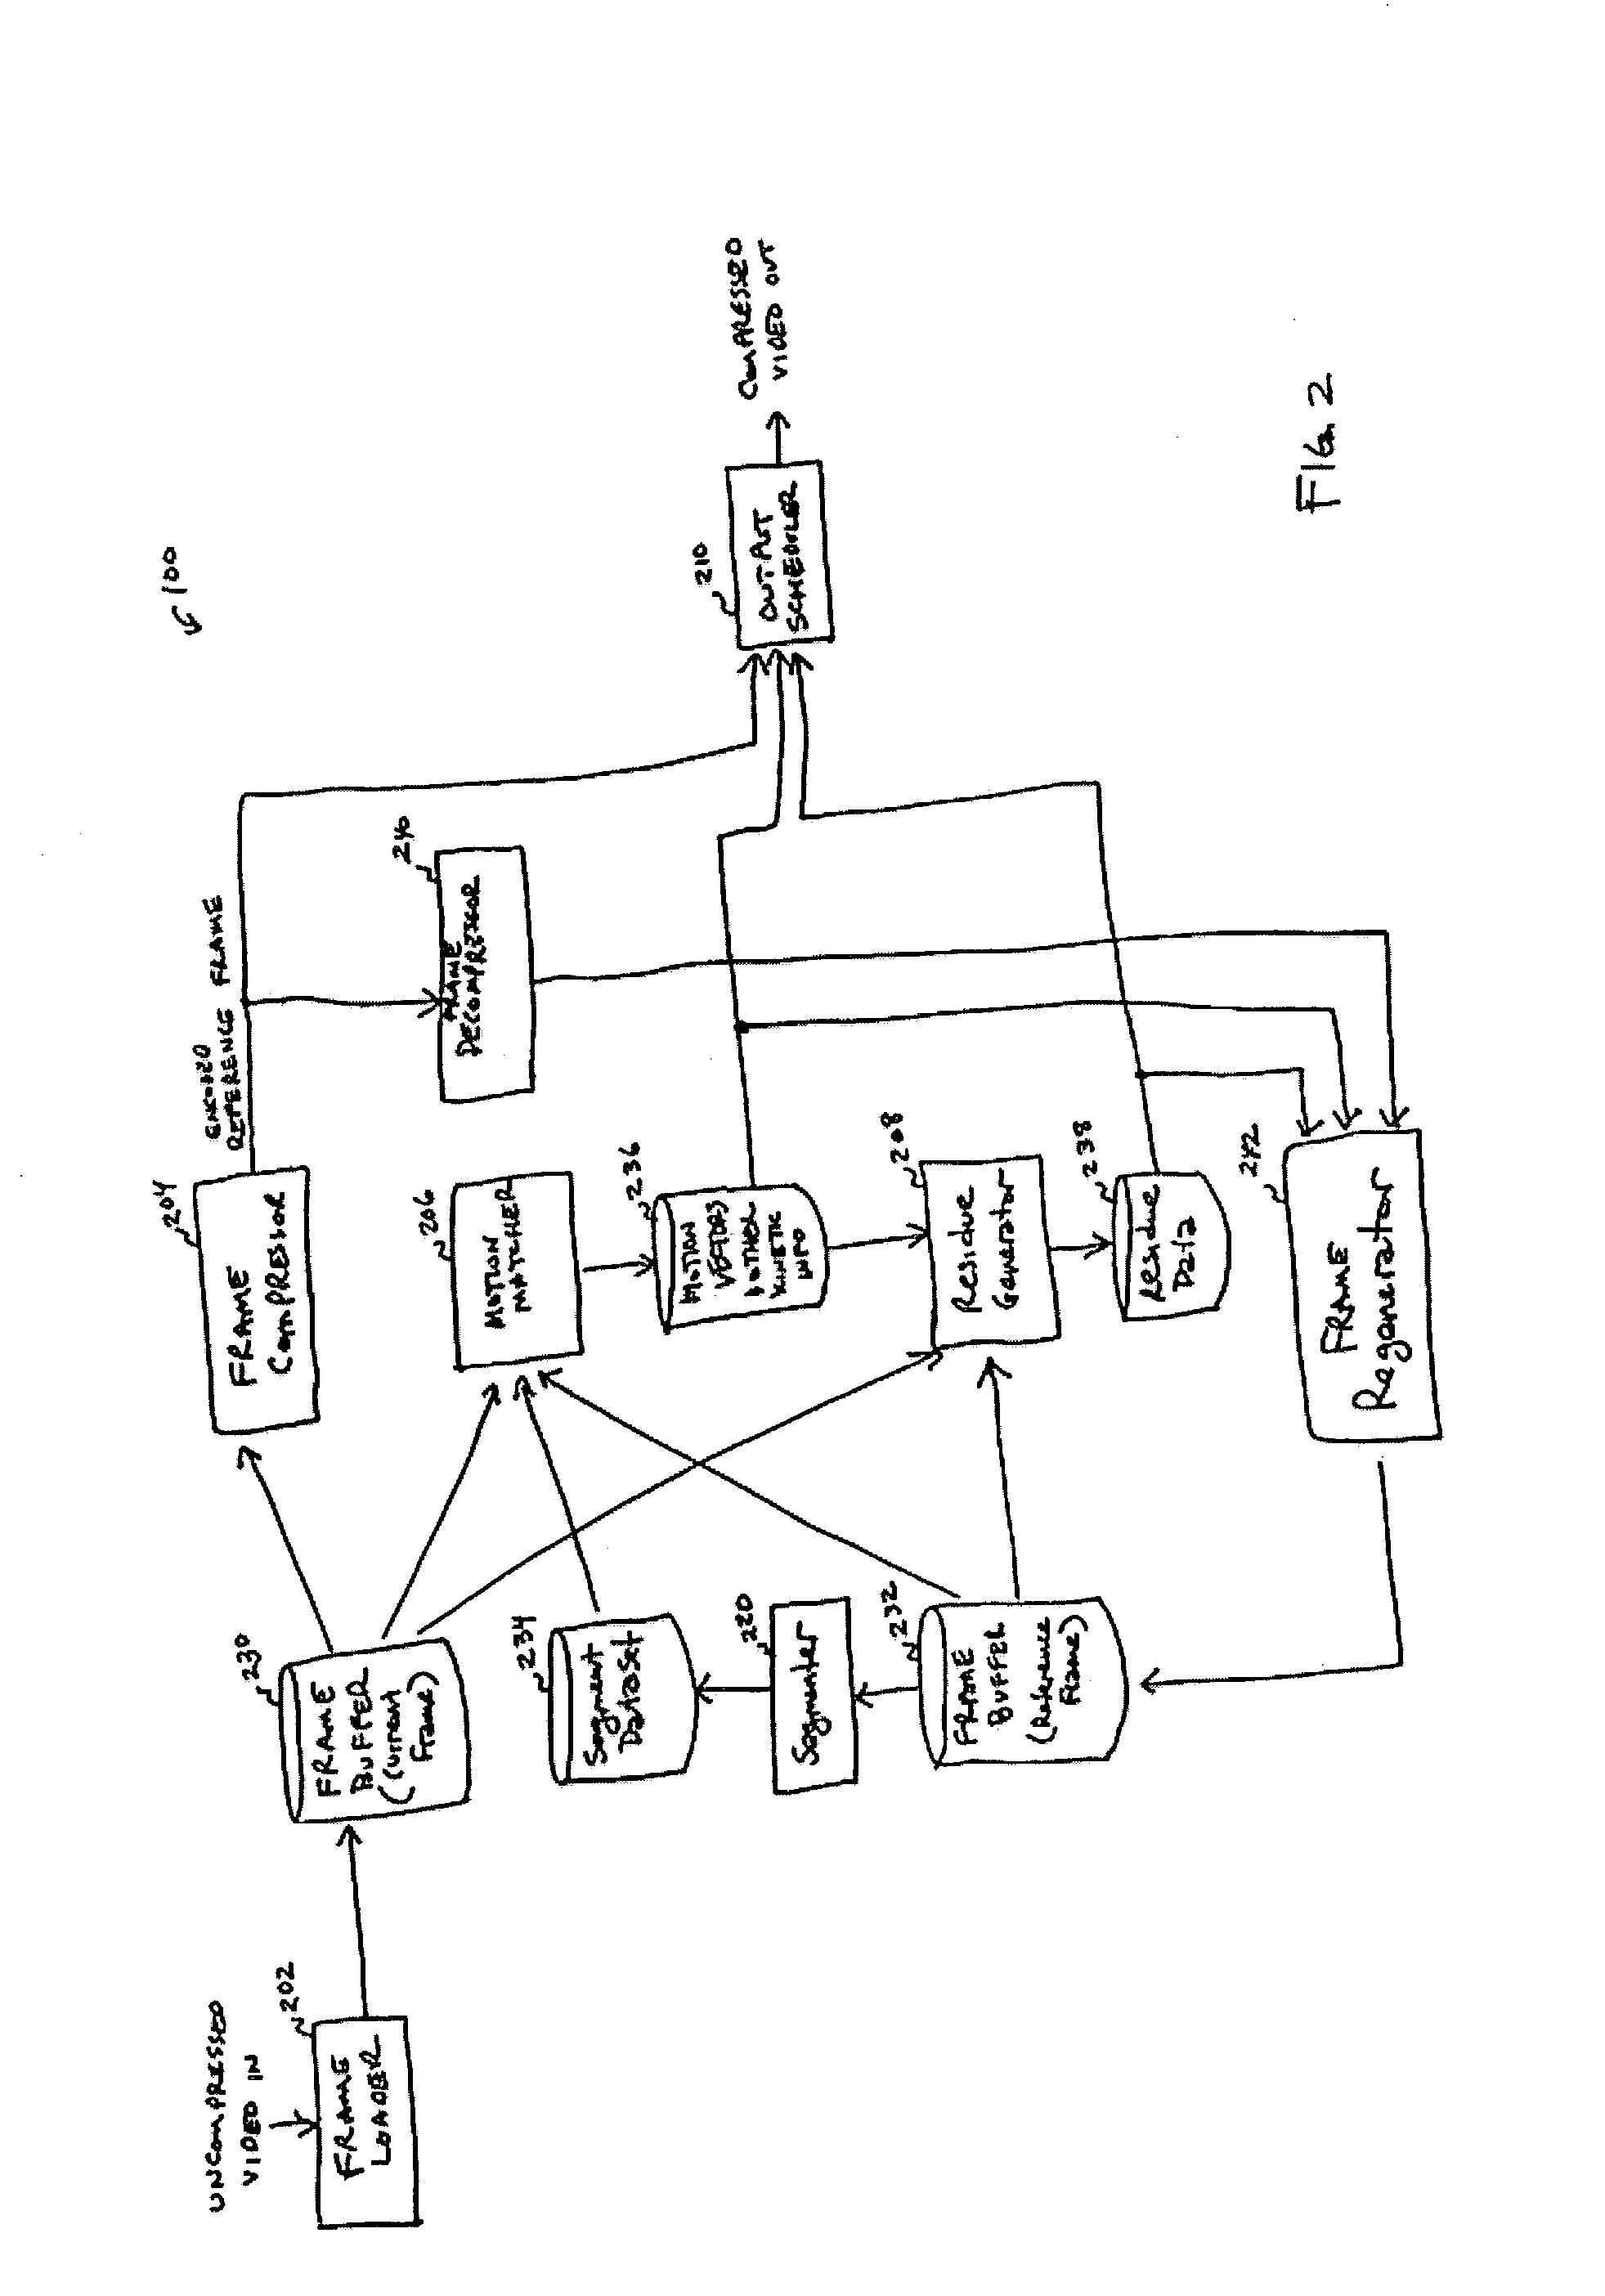 Segment-based encoding system using segment hierarchies